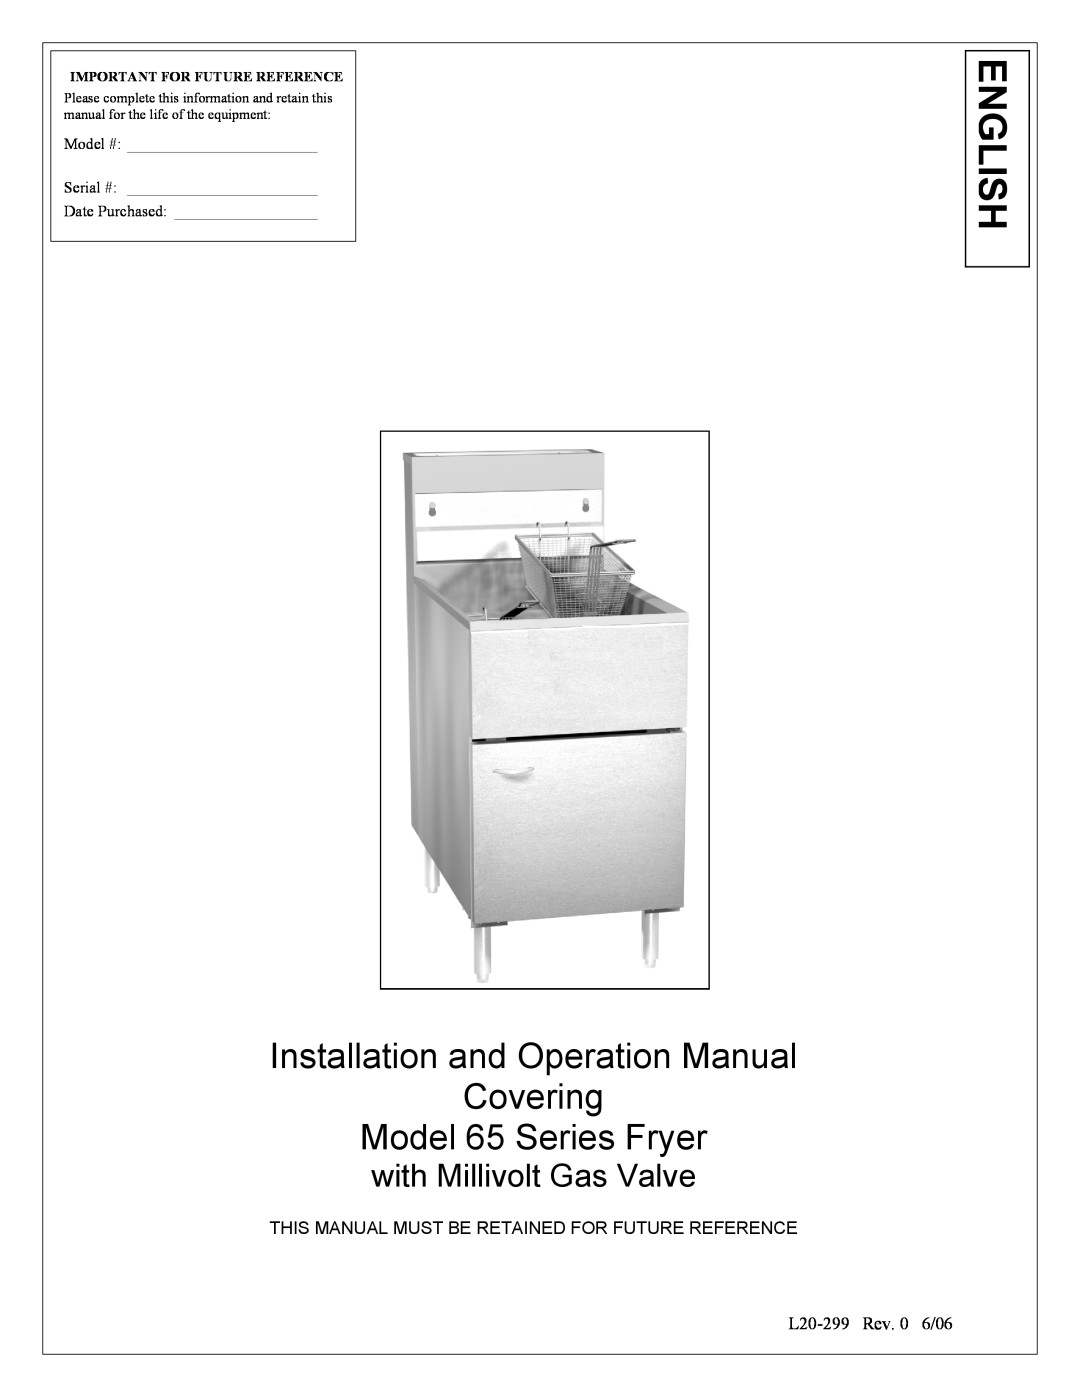 Pitco Frialator L20-299 operation manual Model 65 Series Fryer, with Millivolt Gas Valve, English, Serial # 